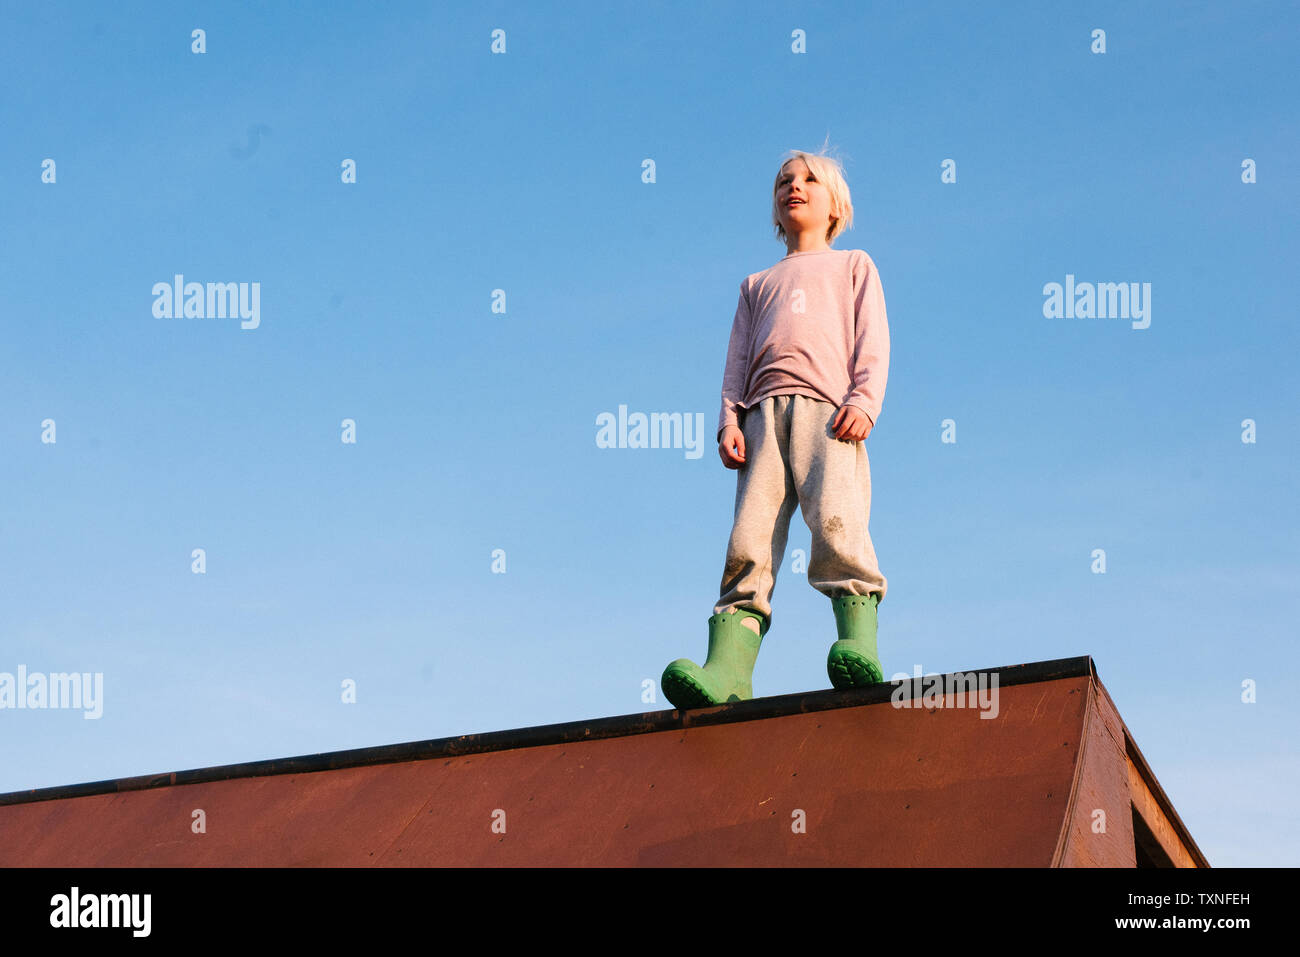 Junge auf dem Skateboard Rampe gegen den blauen Himmel, Low Angle View Stockfoto